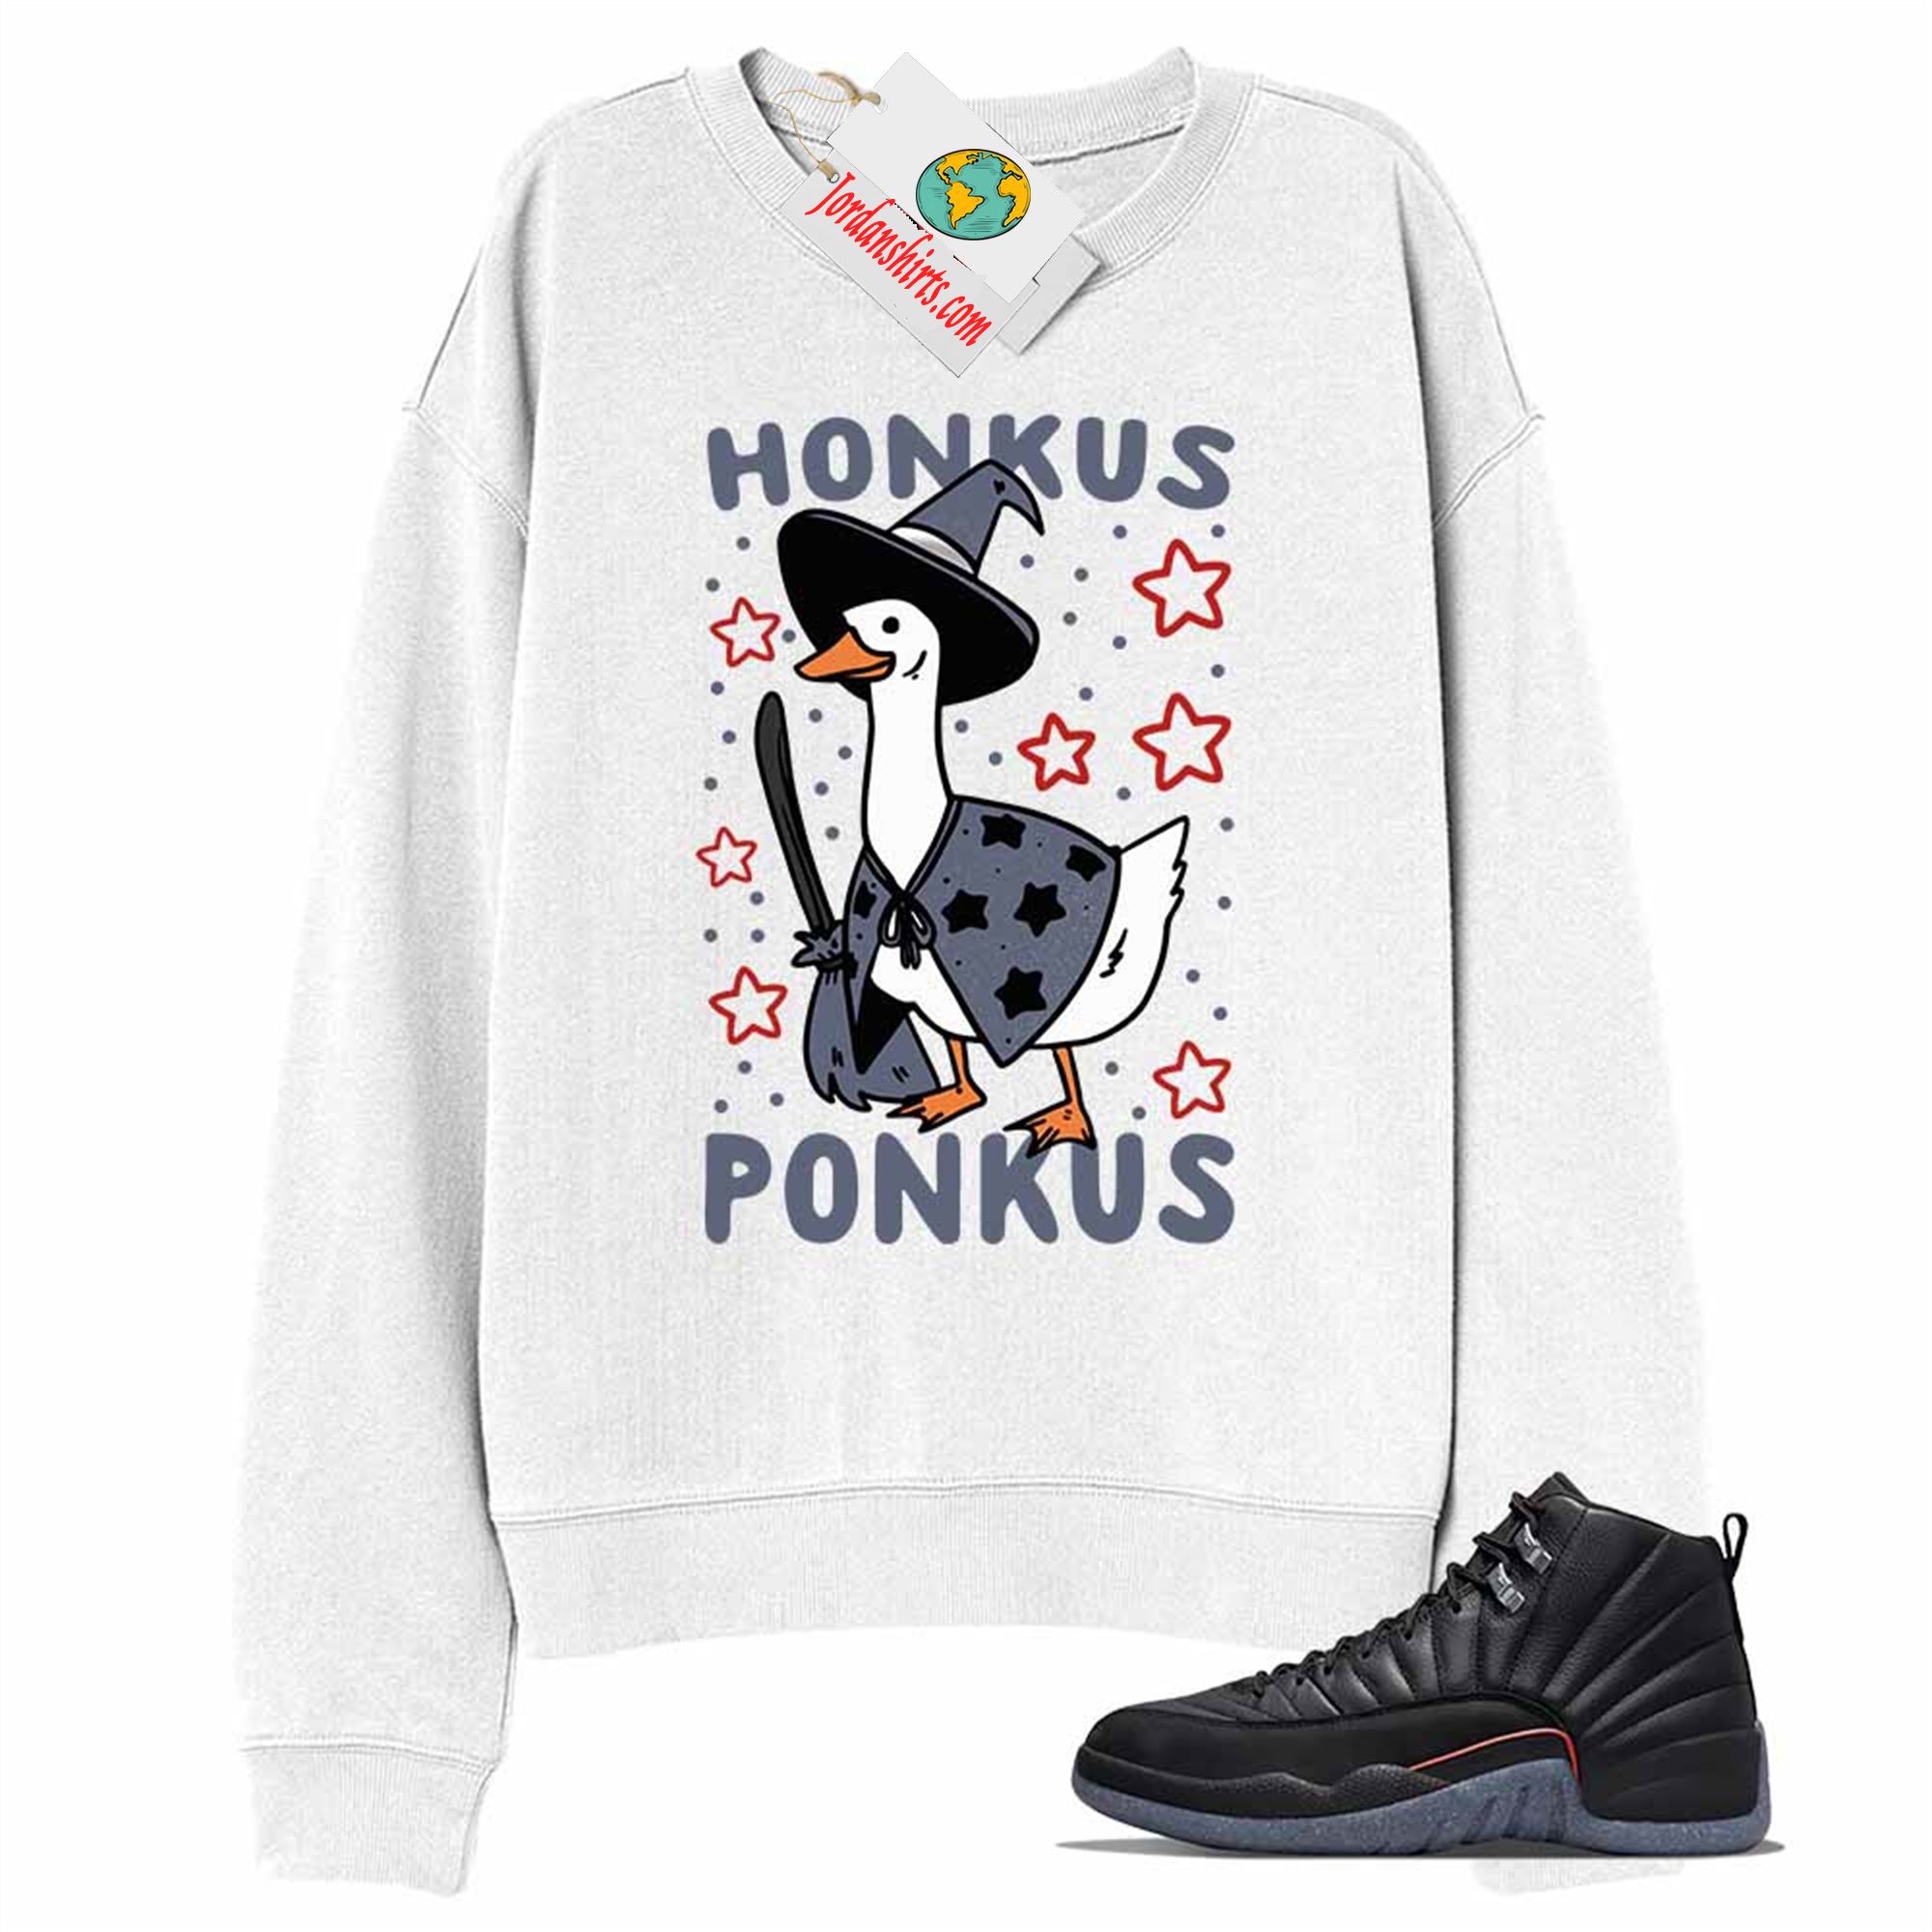 Jordan 12 Sweatshirt, Witches Duck Honkus Ponkus White Sweatshirt Air Jordan 12 Utility Grind 12s Full Size Up To 5xl